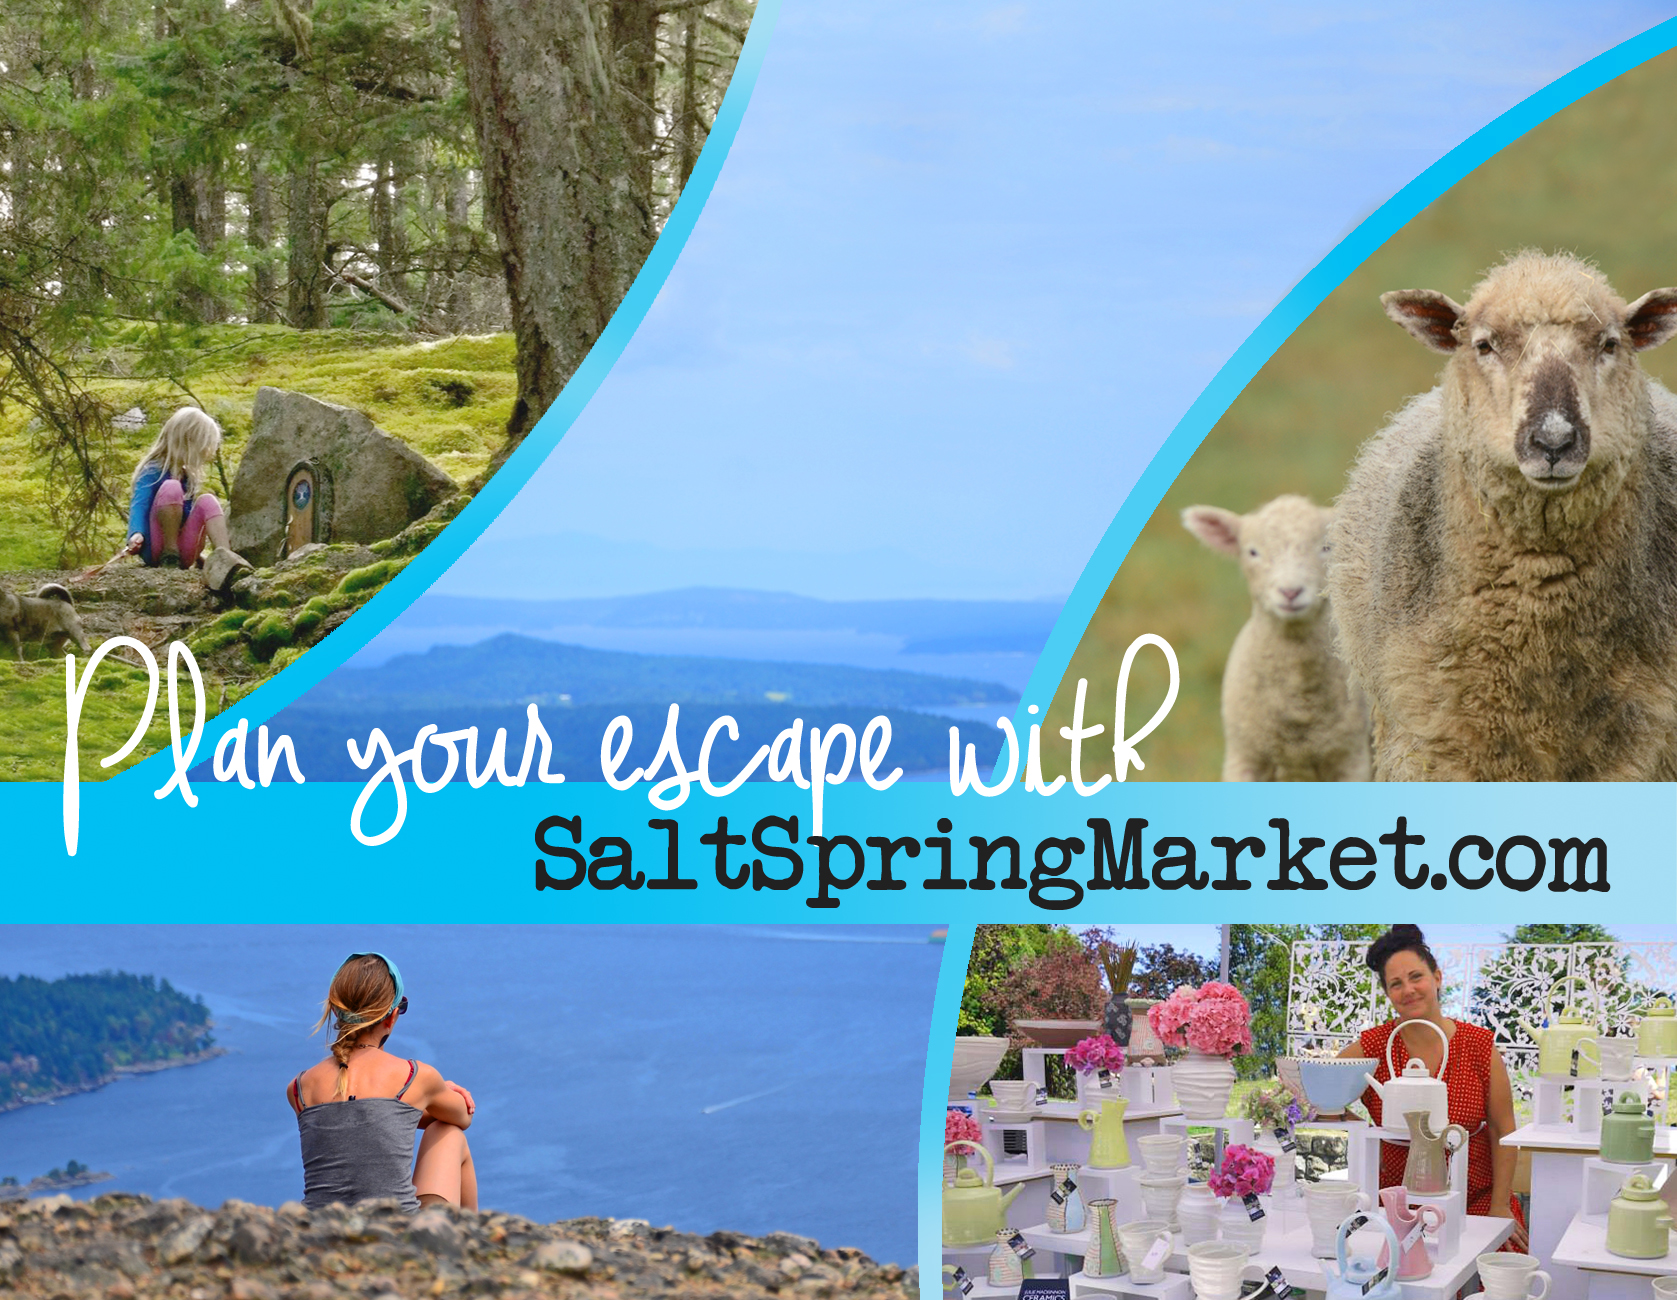 Postcard promoting Salt Spring Island by SaltSpringMarket.com